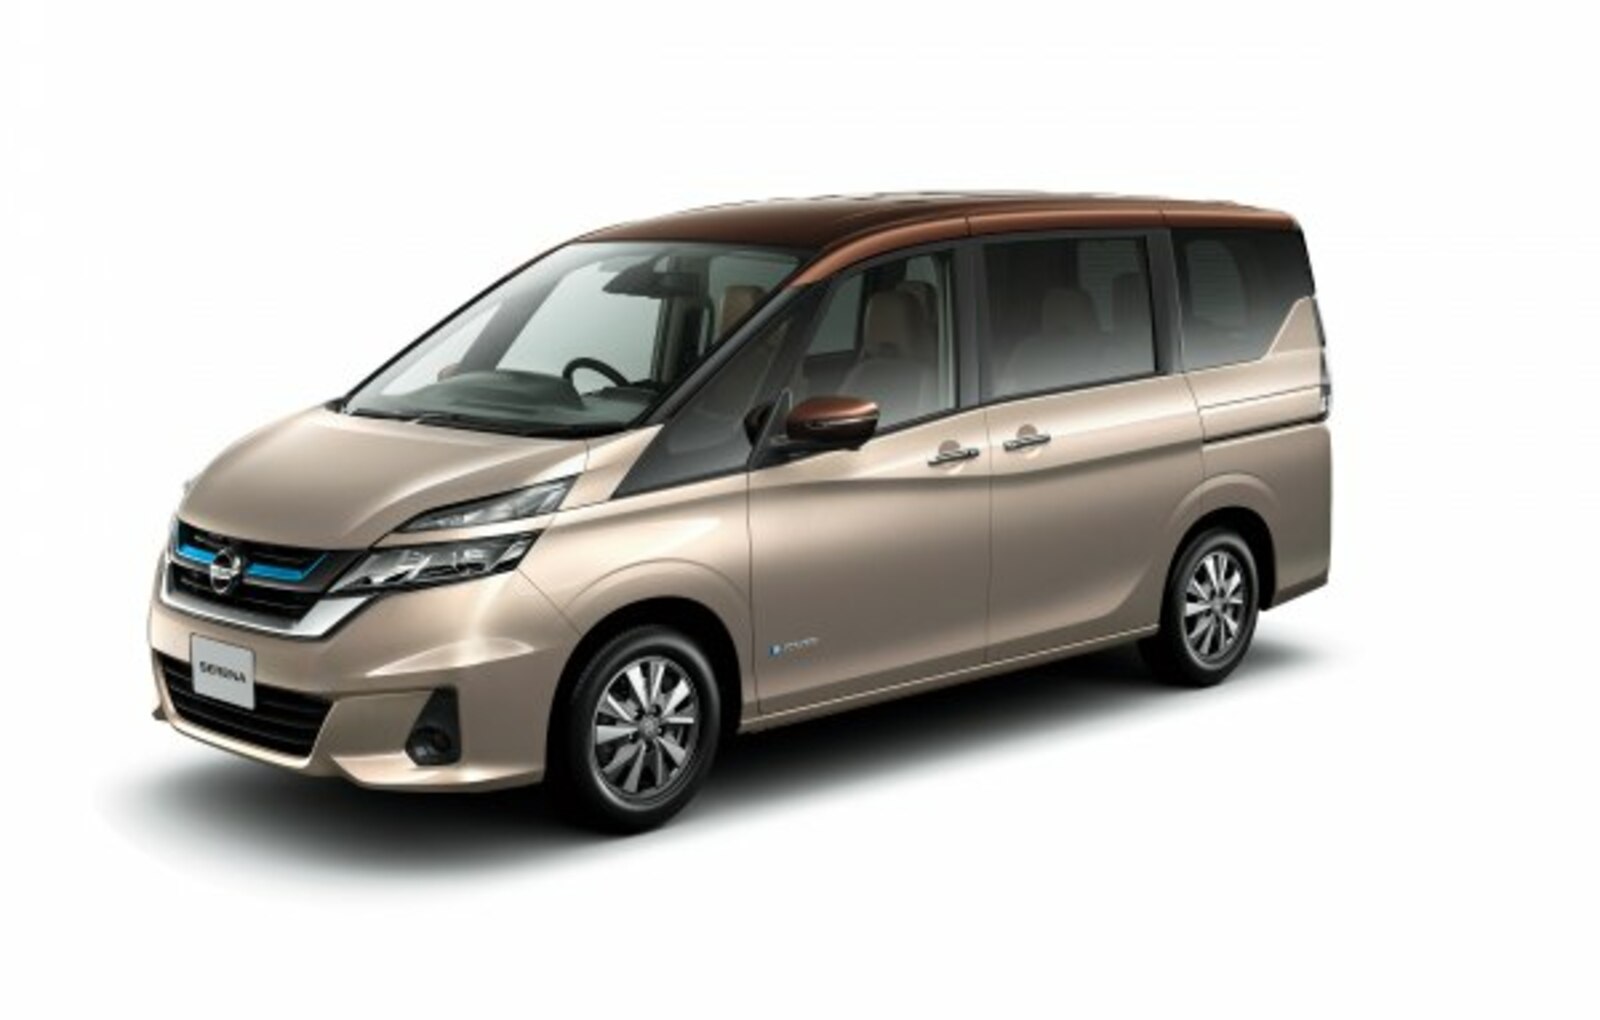 Nissan Serena (C27) 2.0 (150 Hp) S-Hybrid CVT 2016, 2017, 2018, 2019, 2020, 2021 